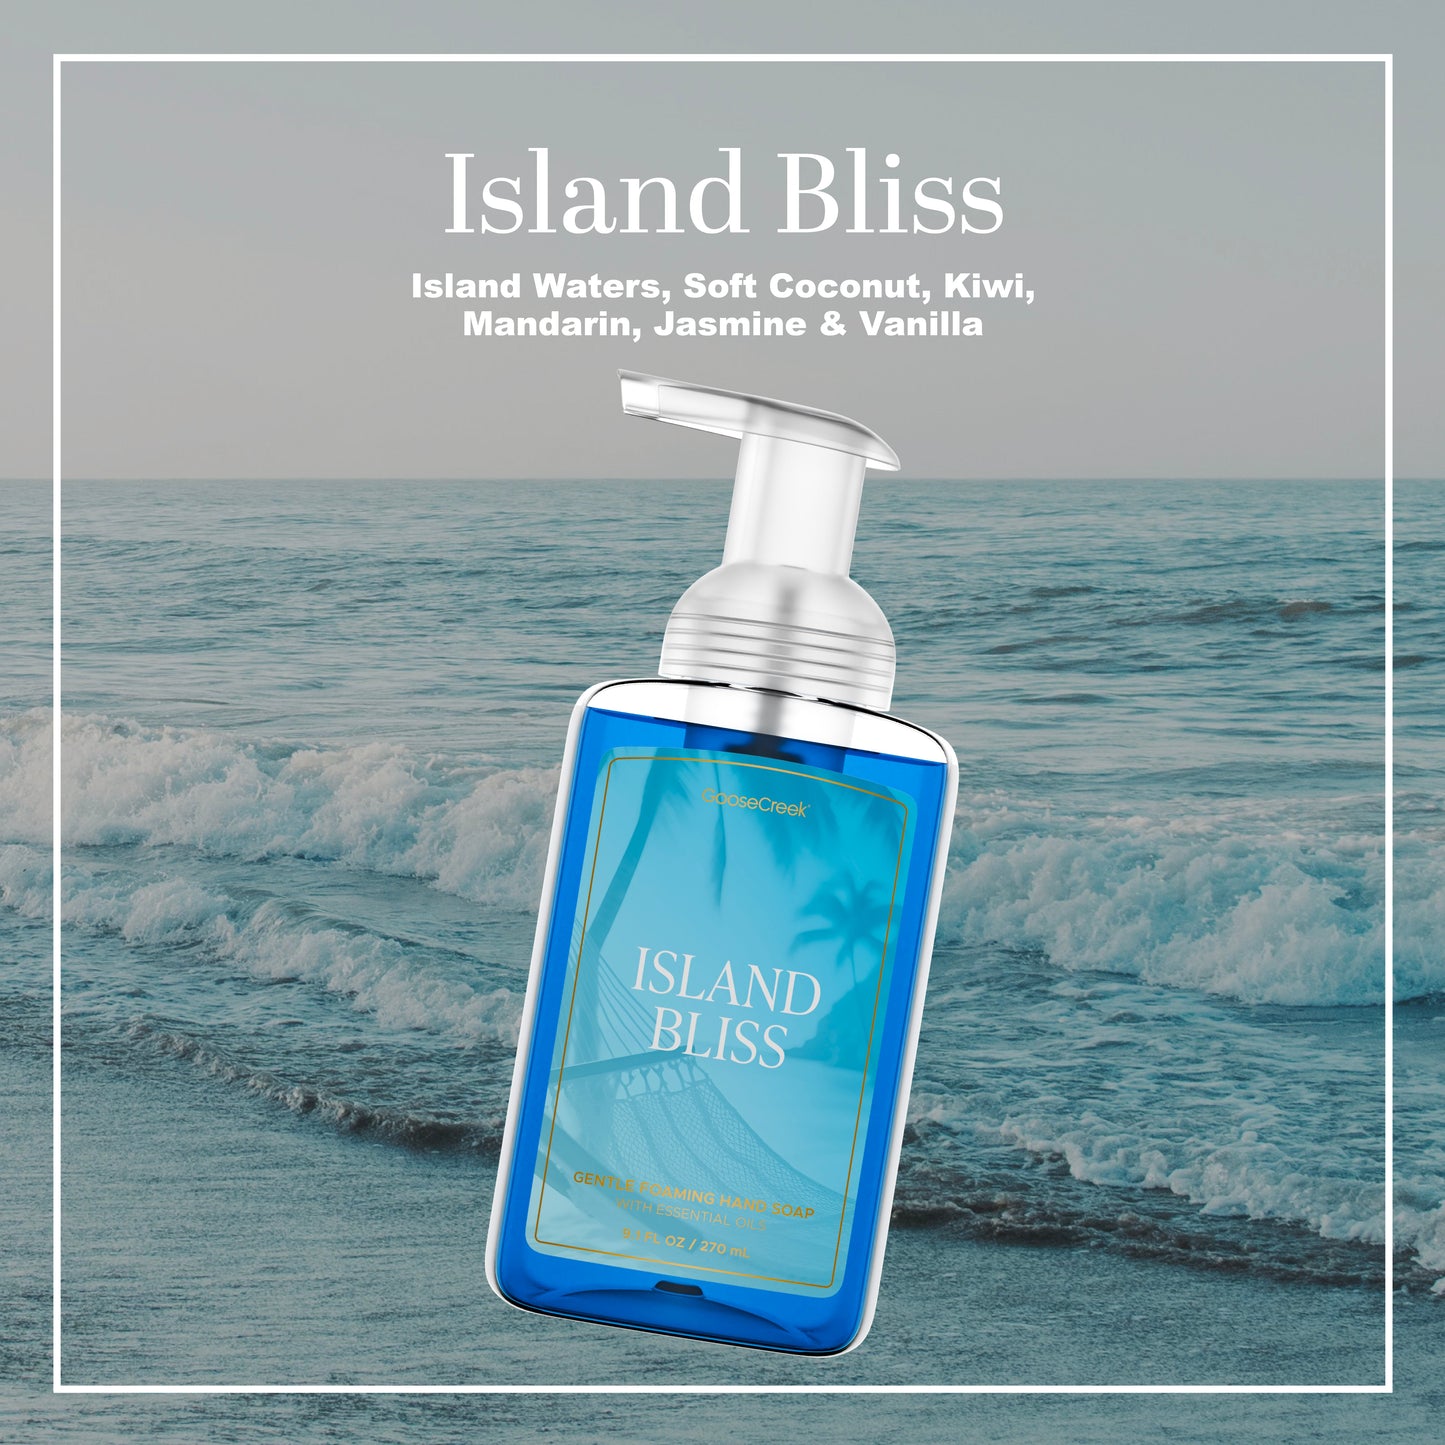 Island Bliss Lush Foaming Hand Soap